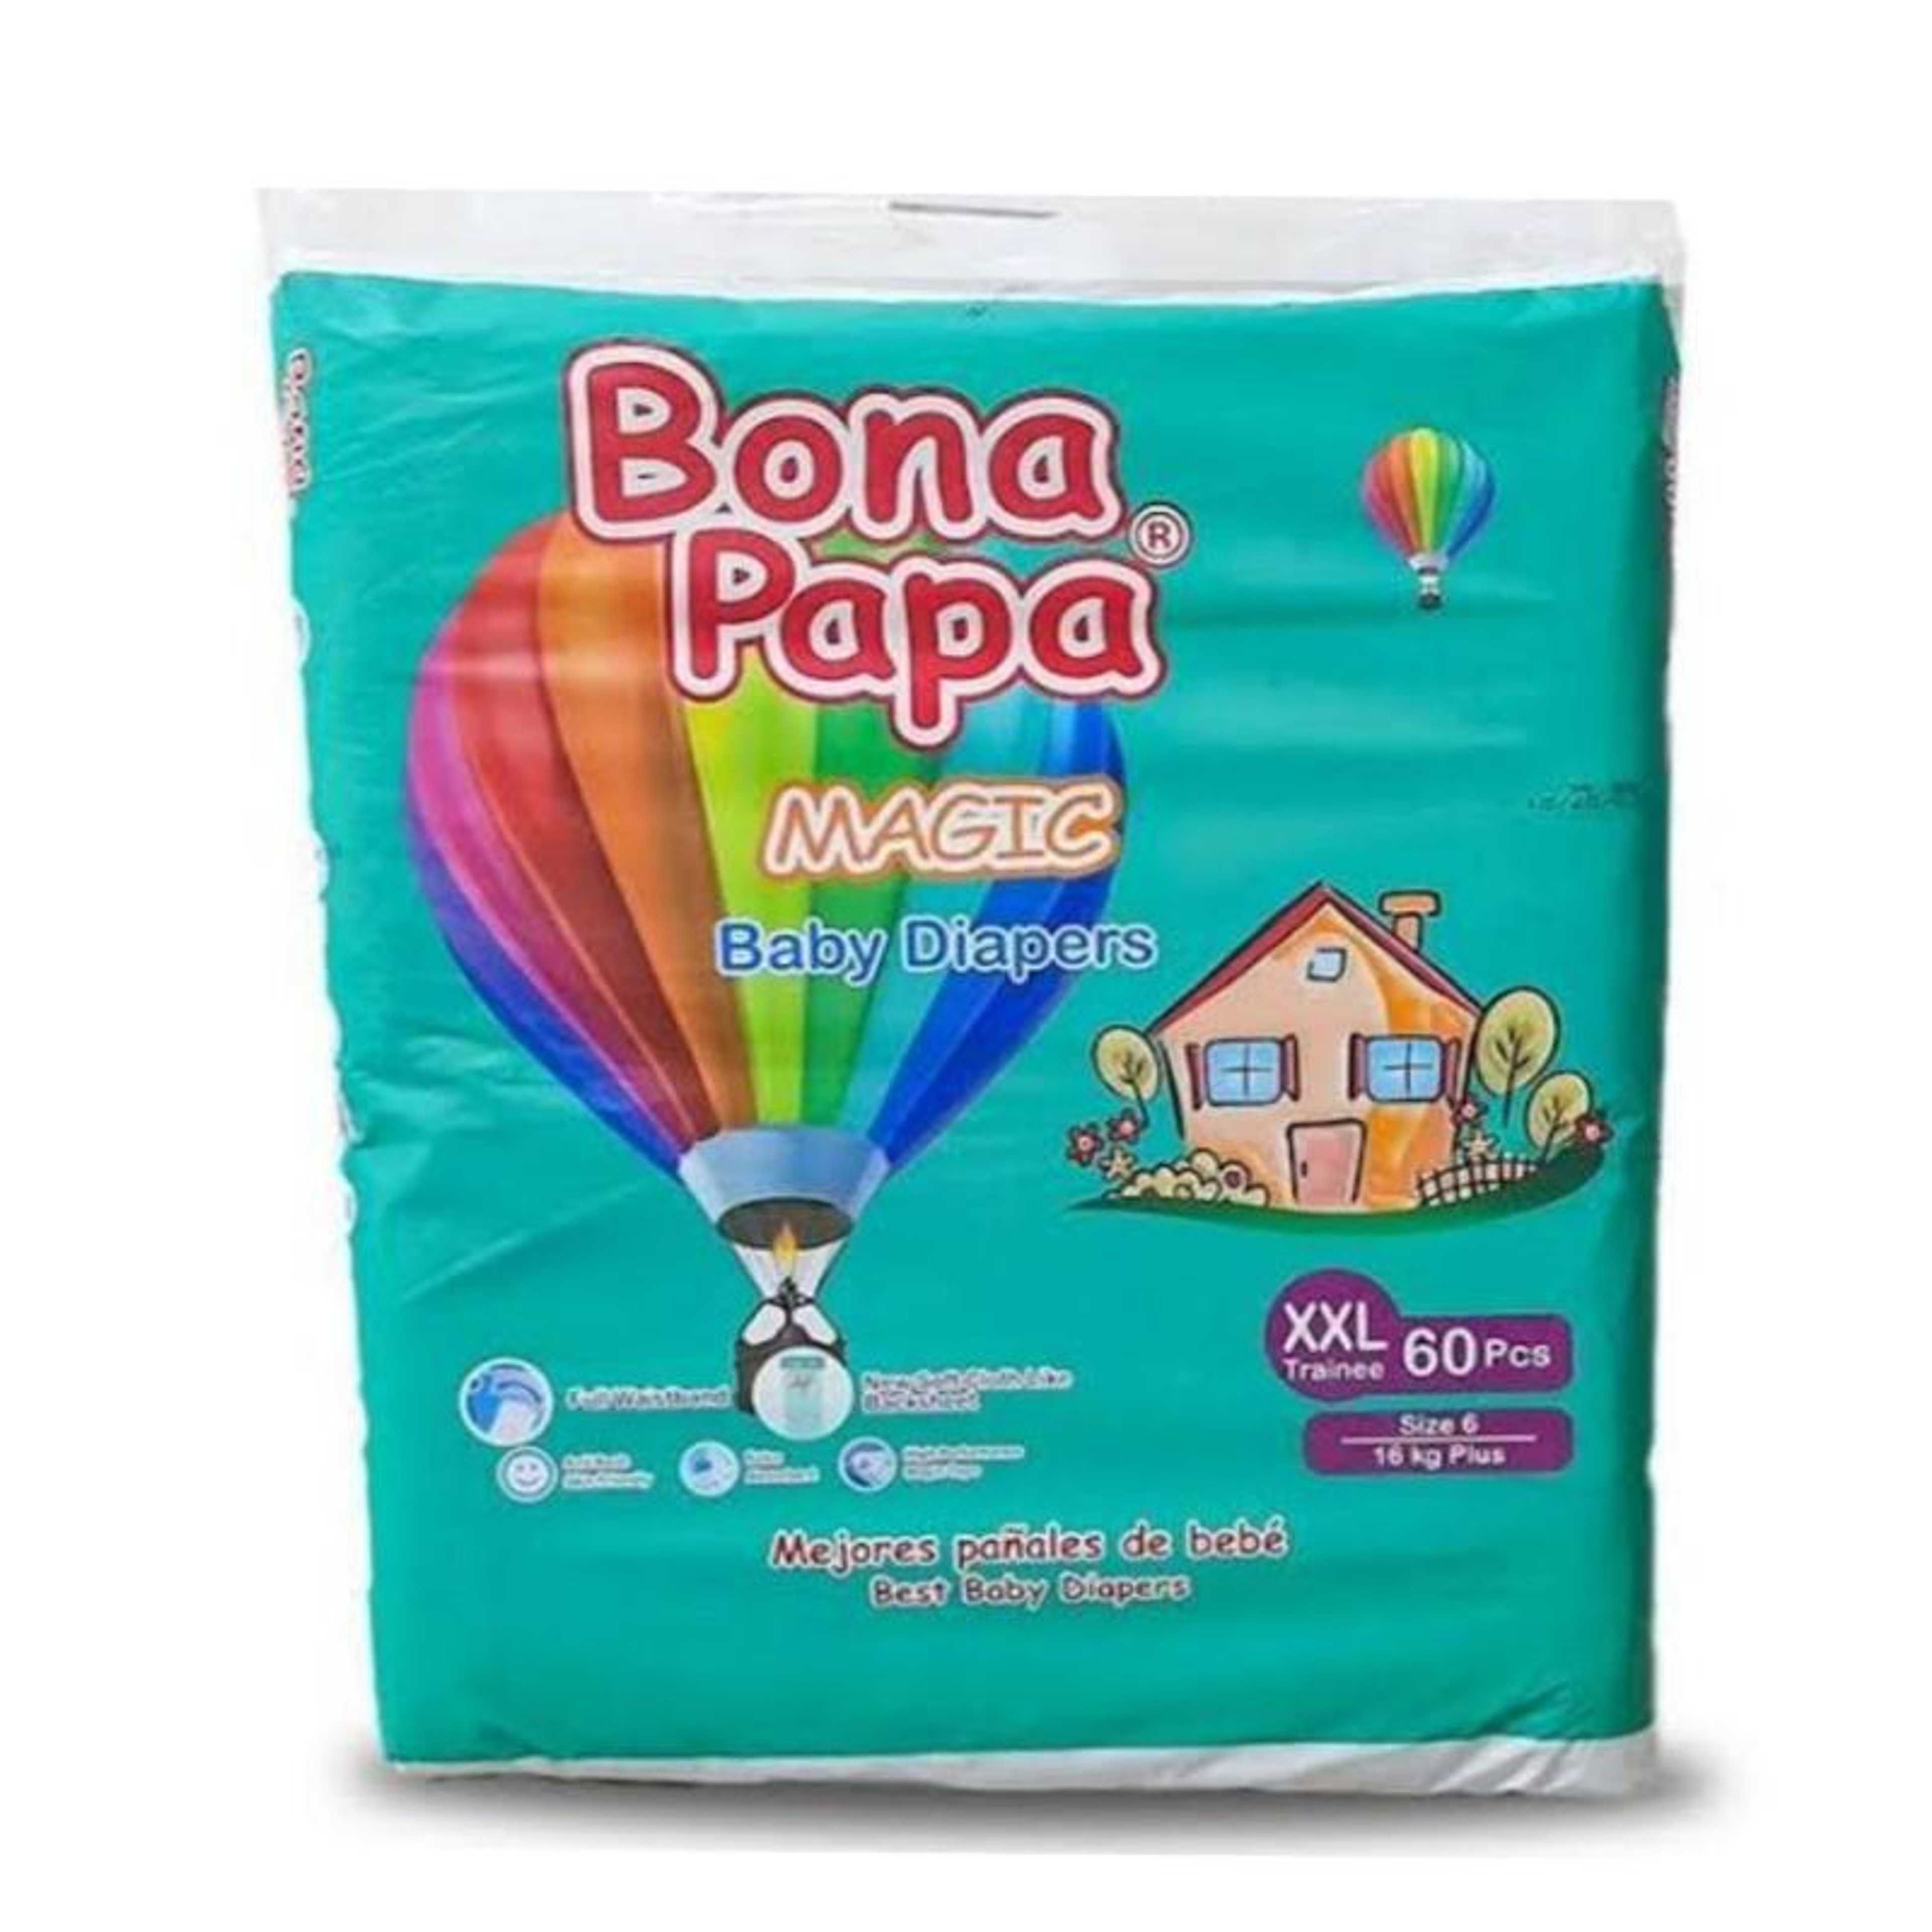 Bona Papa Magic Baby Diaper XXL Size - 60pcs Pack